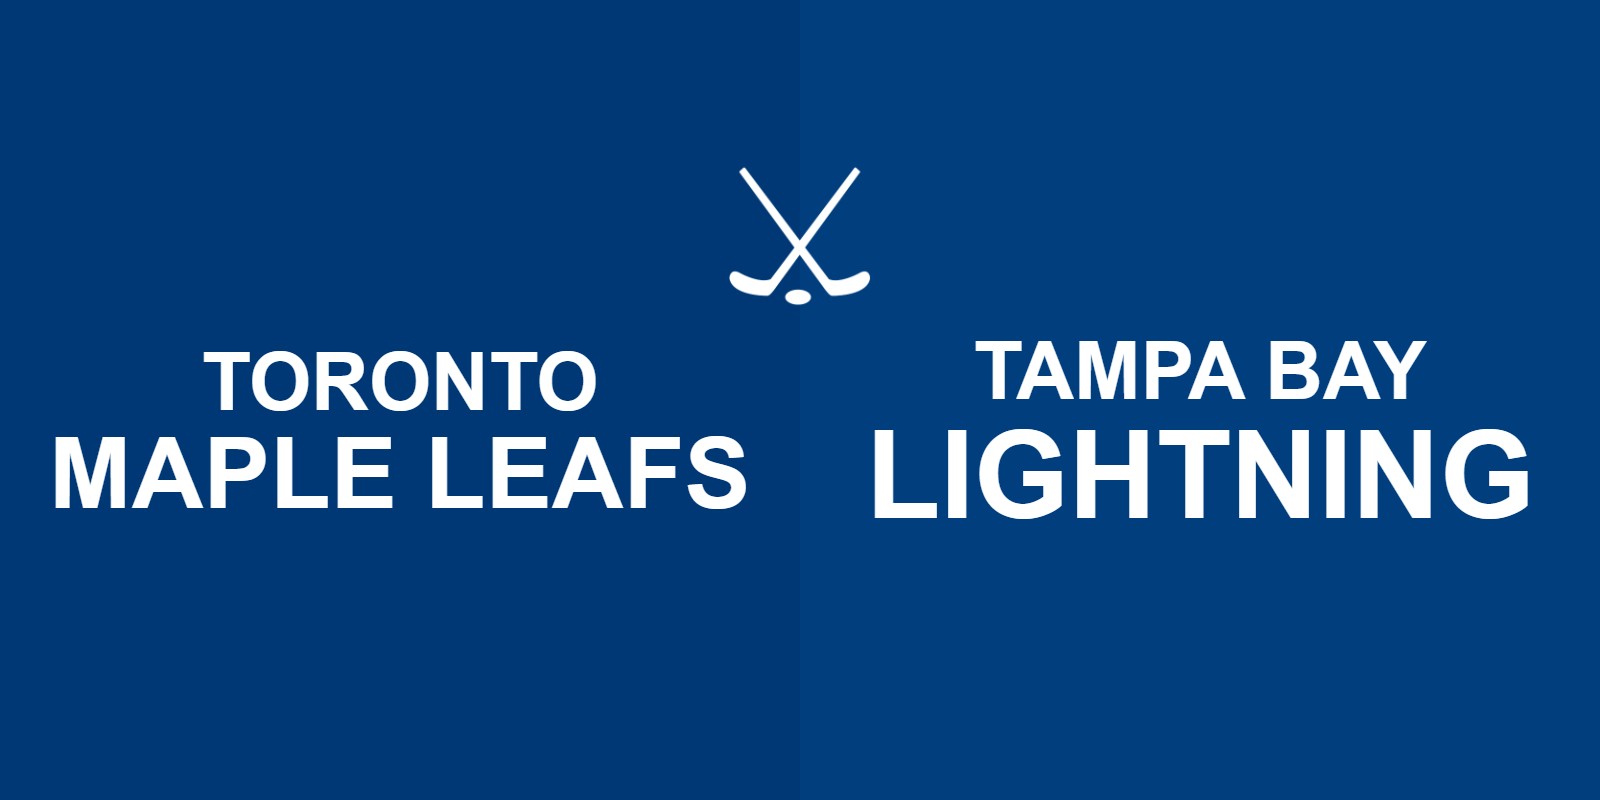 Maple Leafs vs Lightning